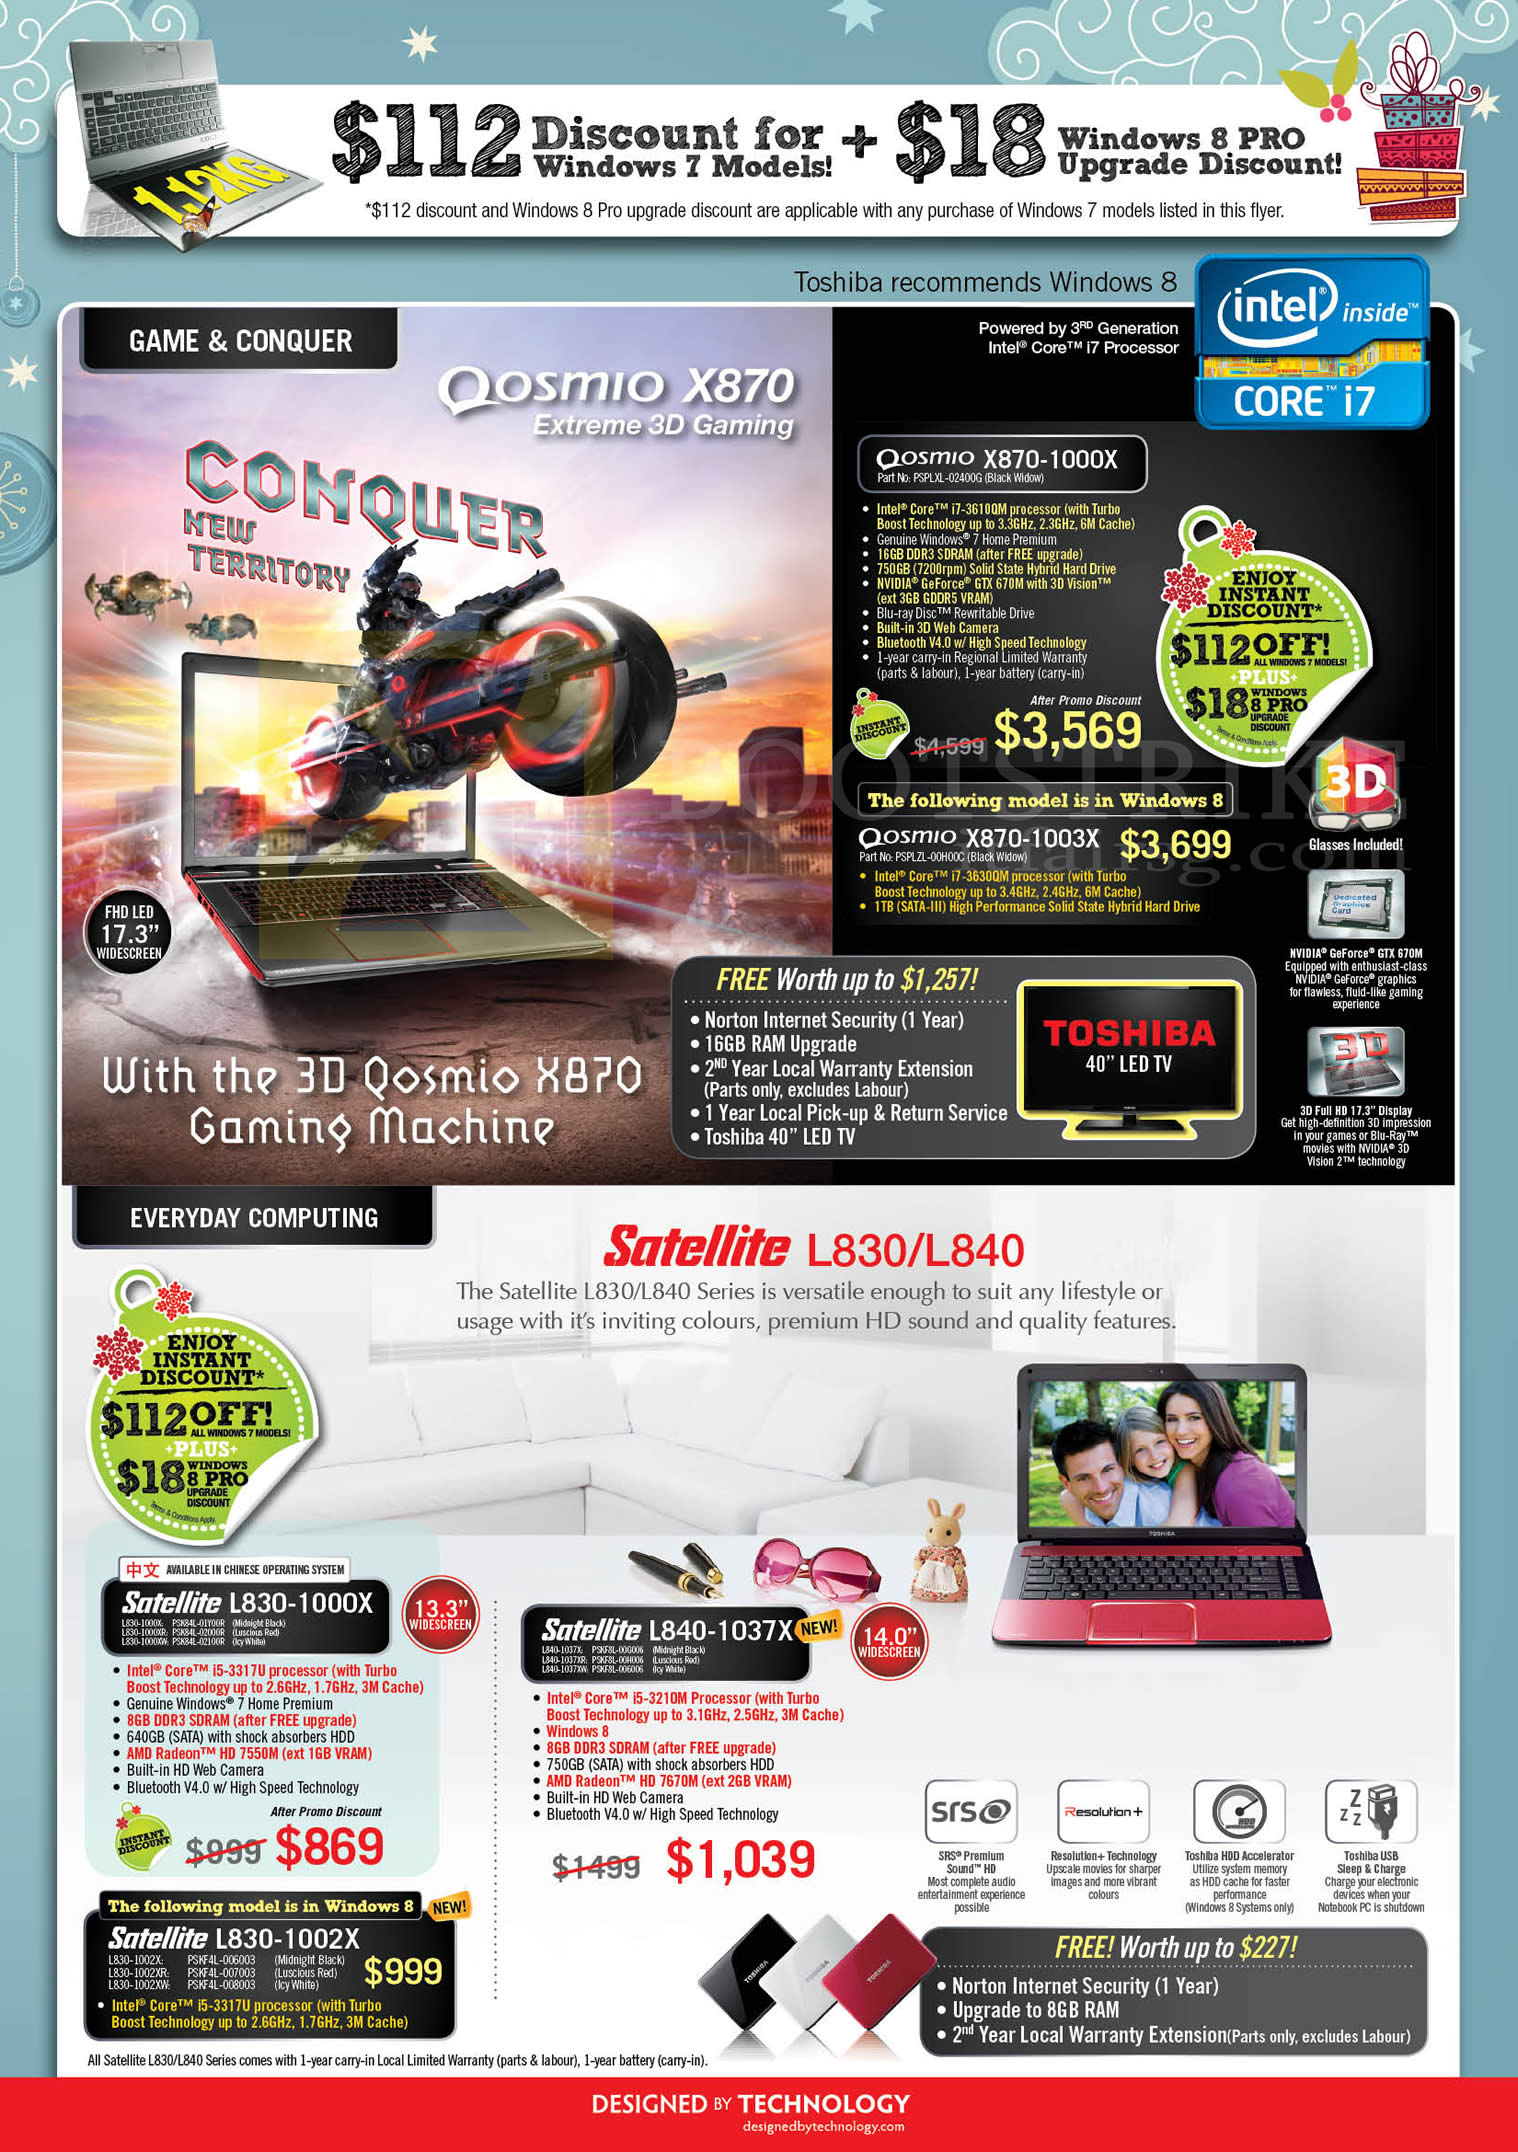 SITEX 2012 price list image brochure of Toshiba Notebooks Satellite L830-1000X, L840-1037X, Qosmio X870-1000X, X870-1003X